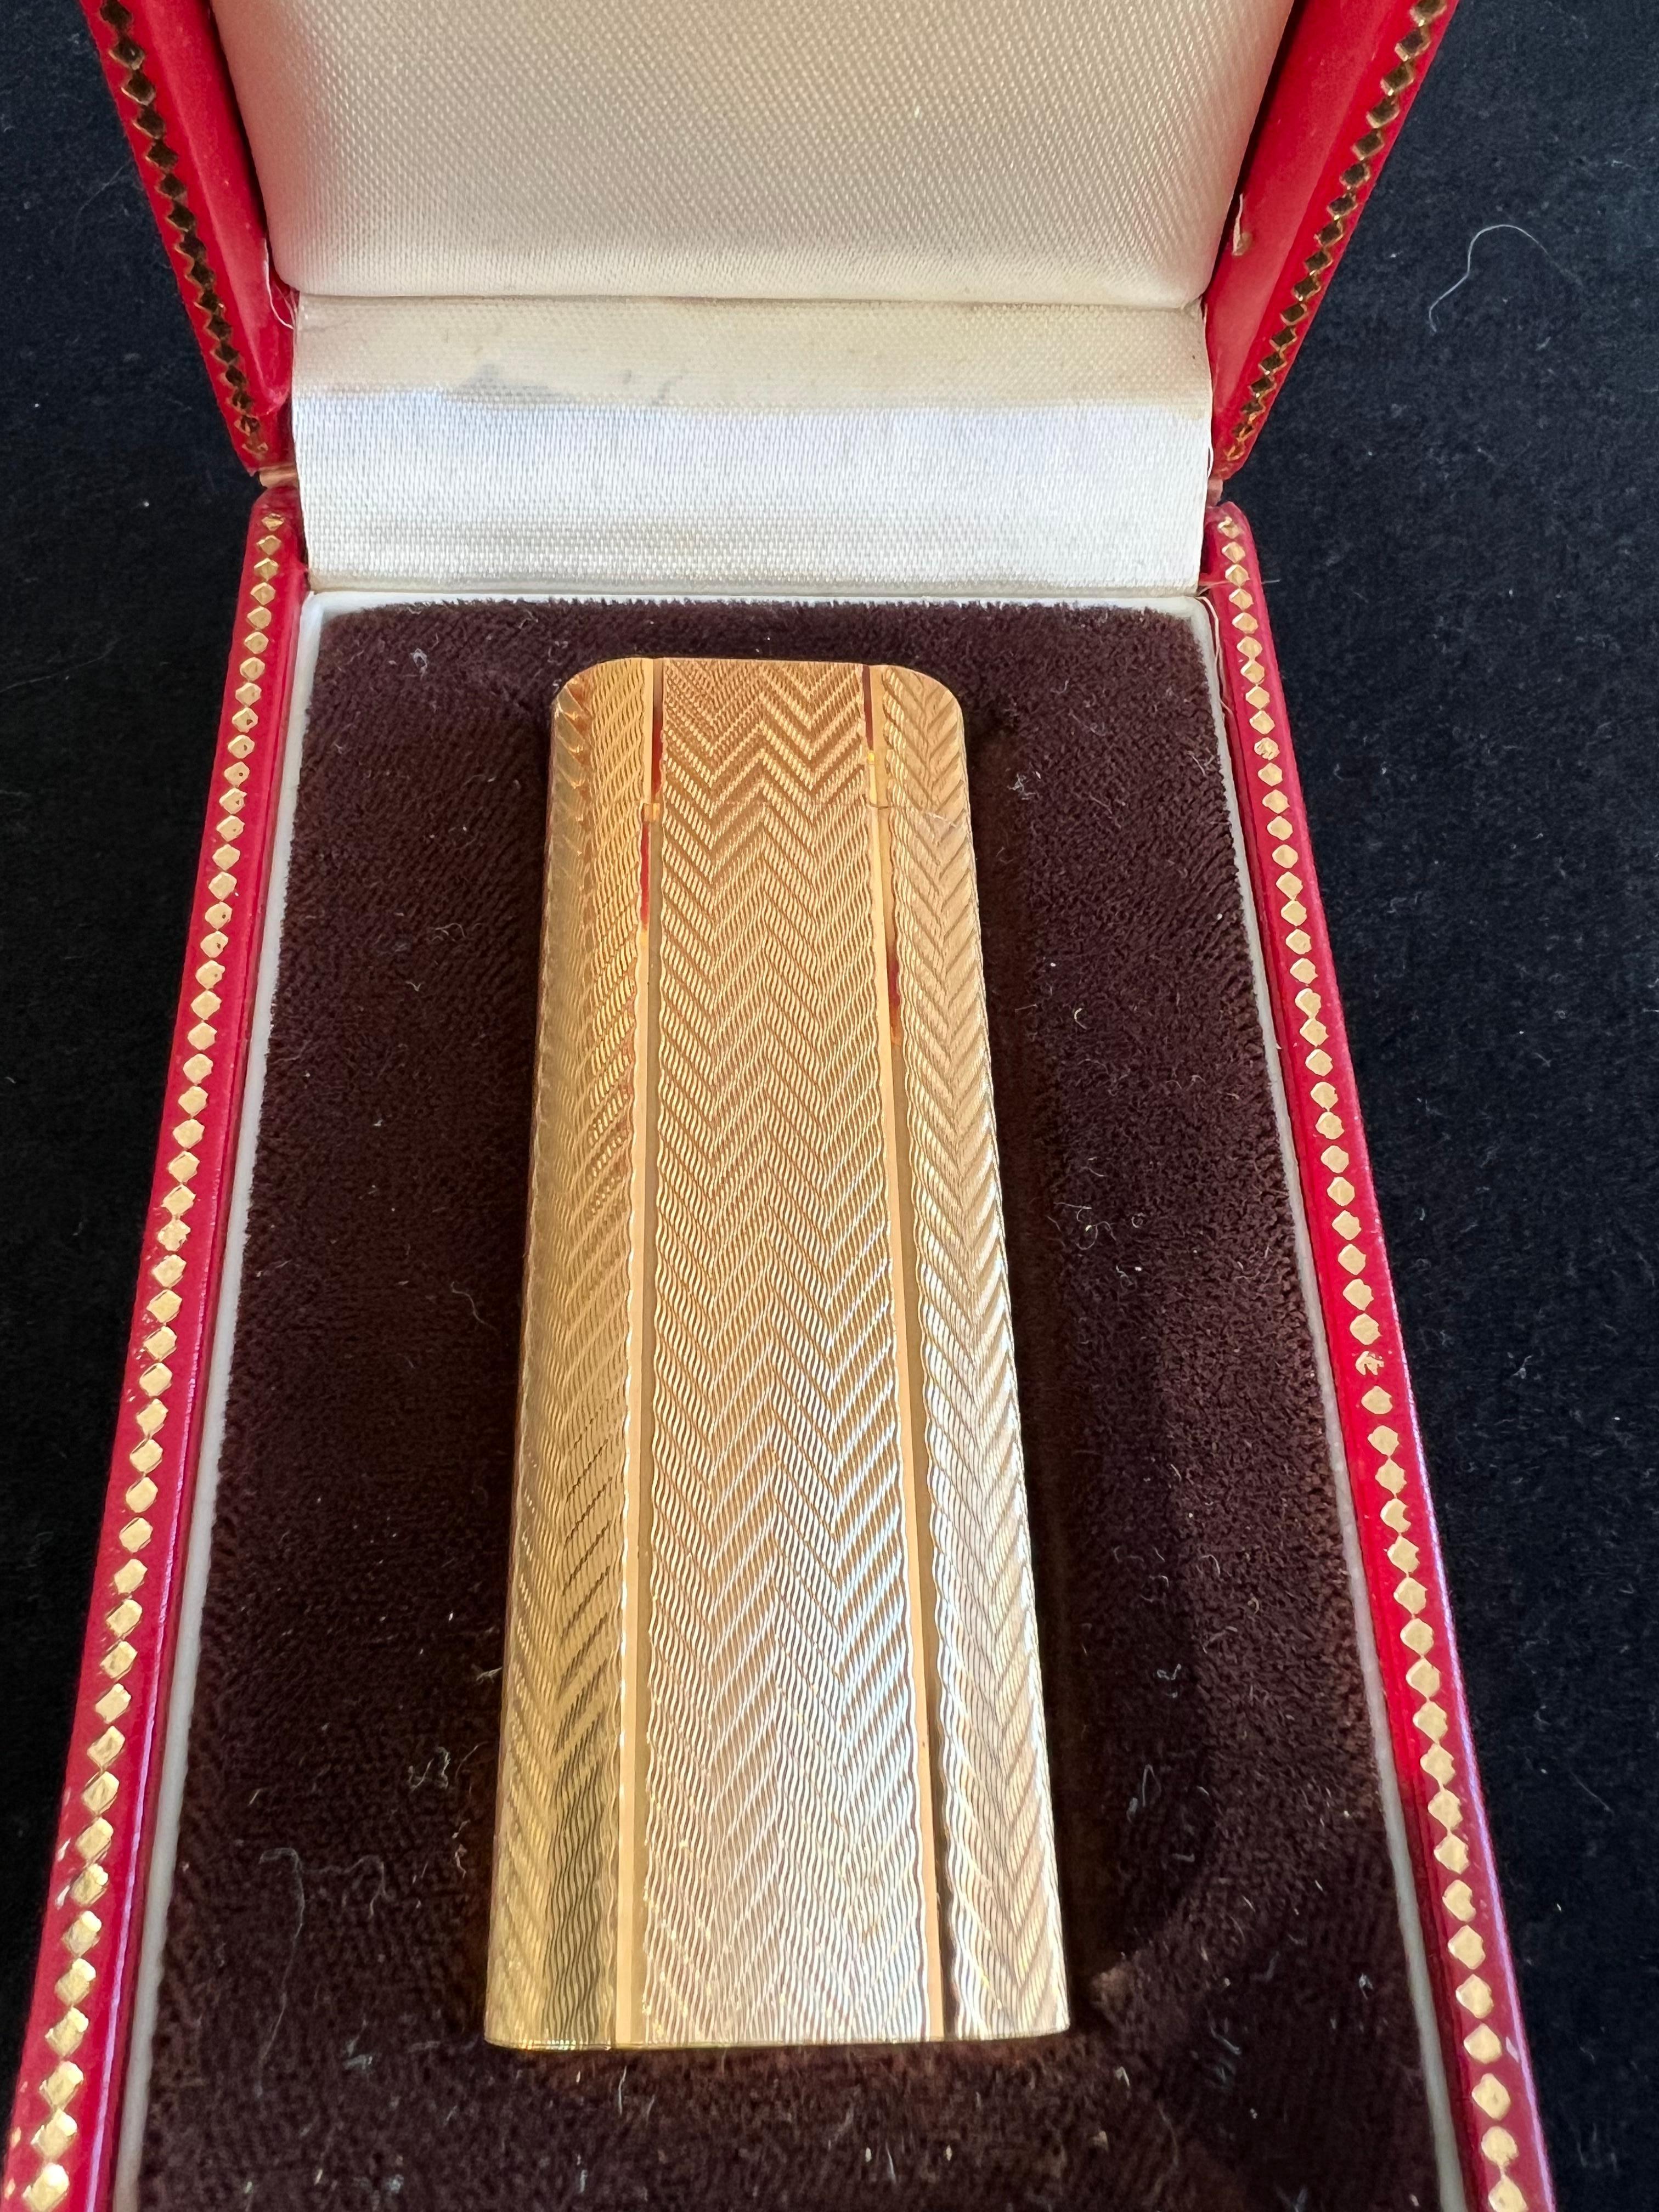 Les Must de Cartier Paris 18k Gold Plated Lighter 5